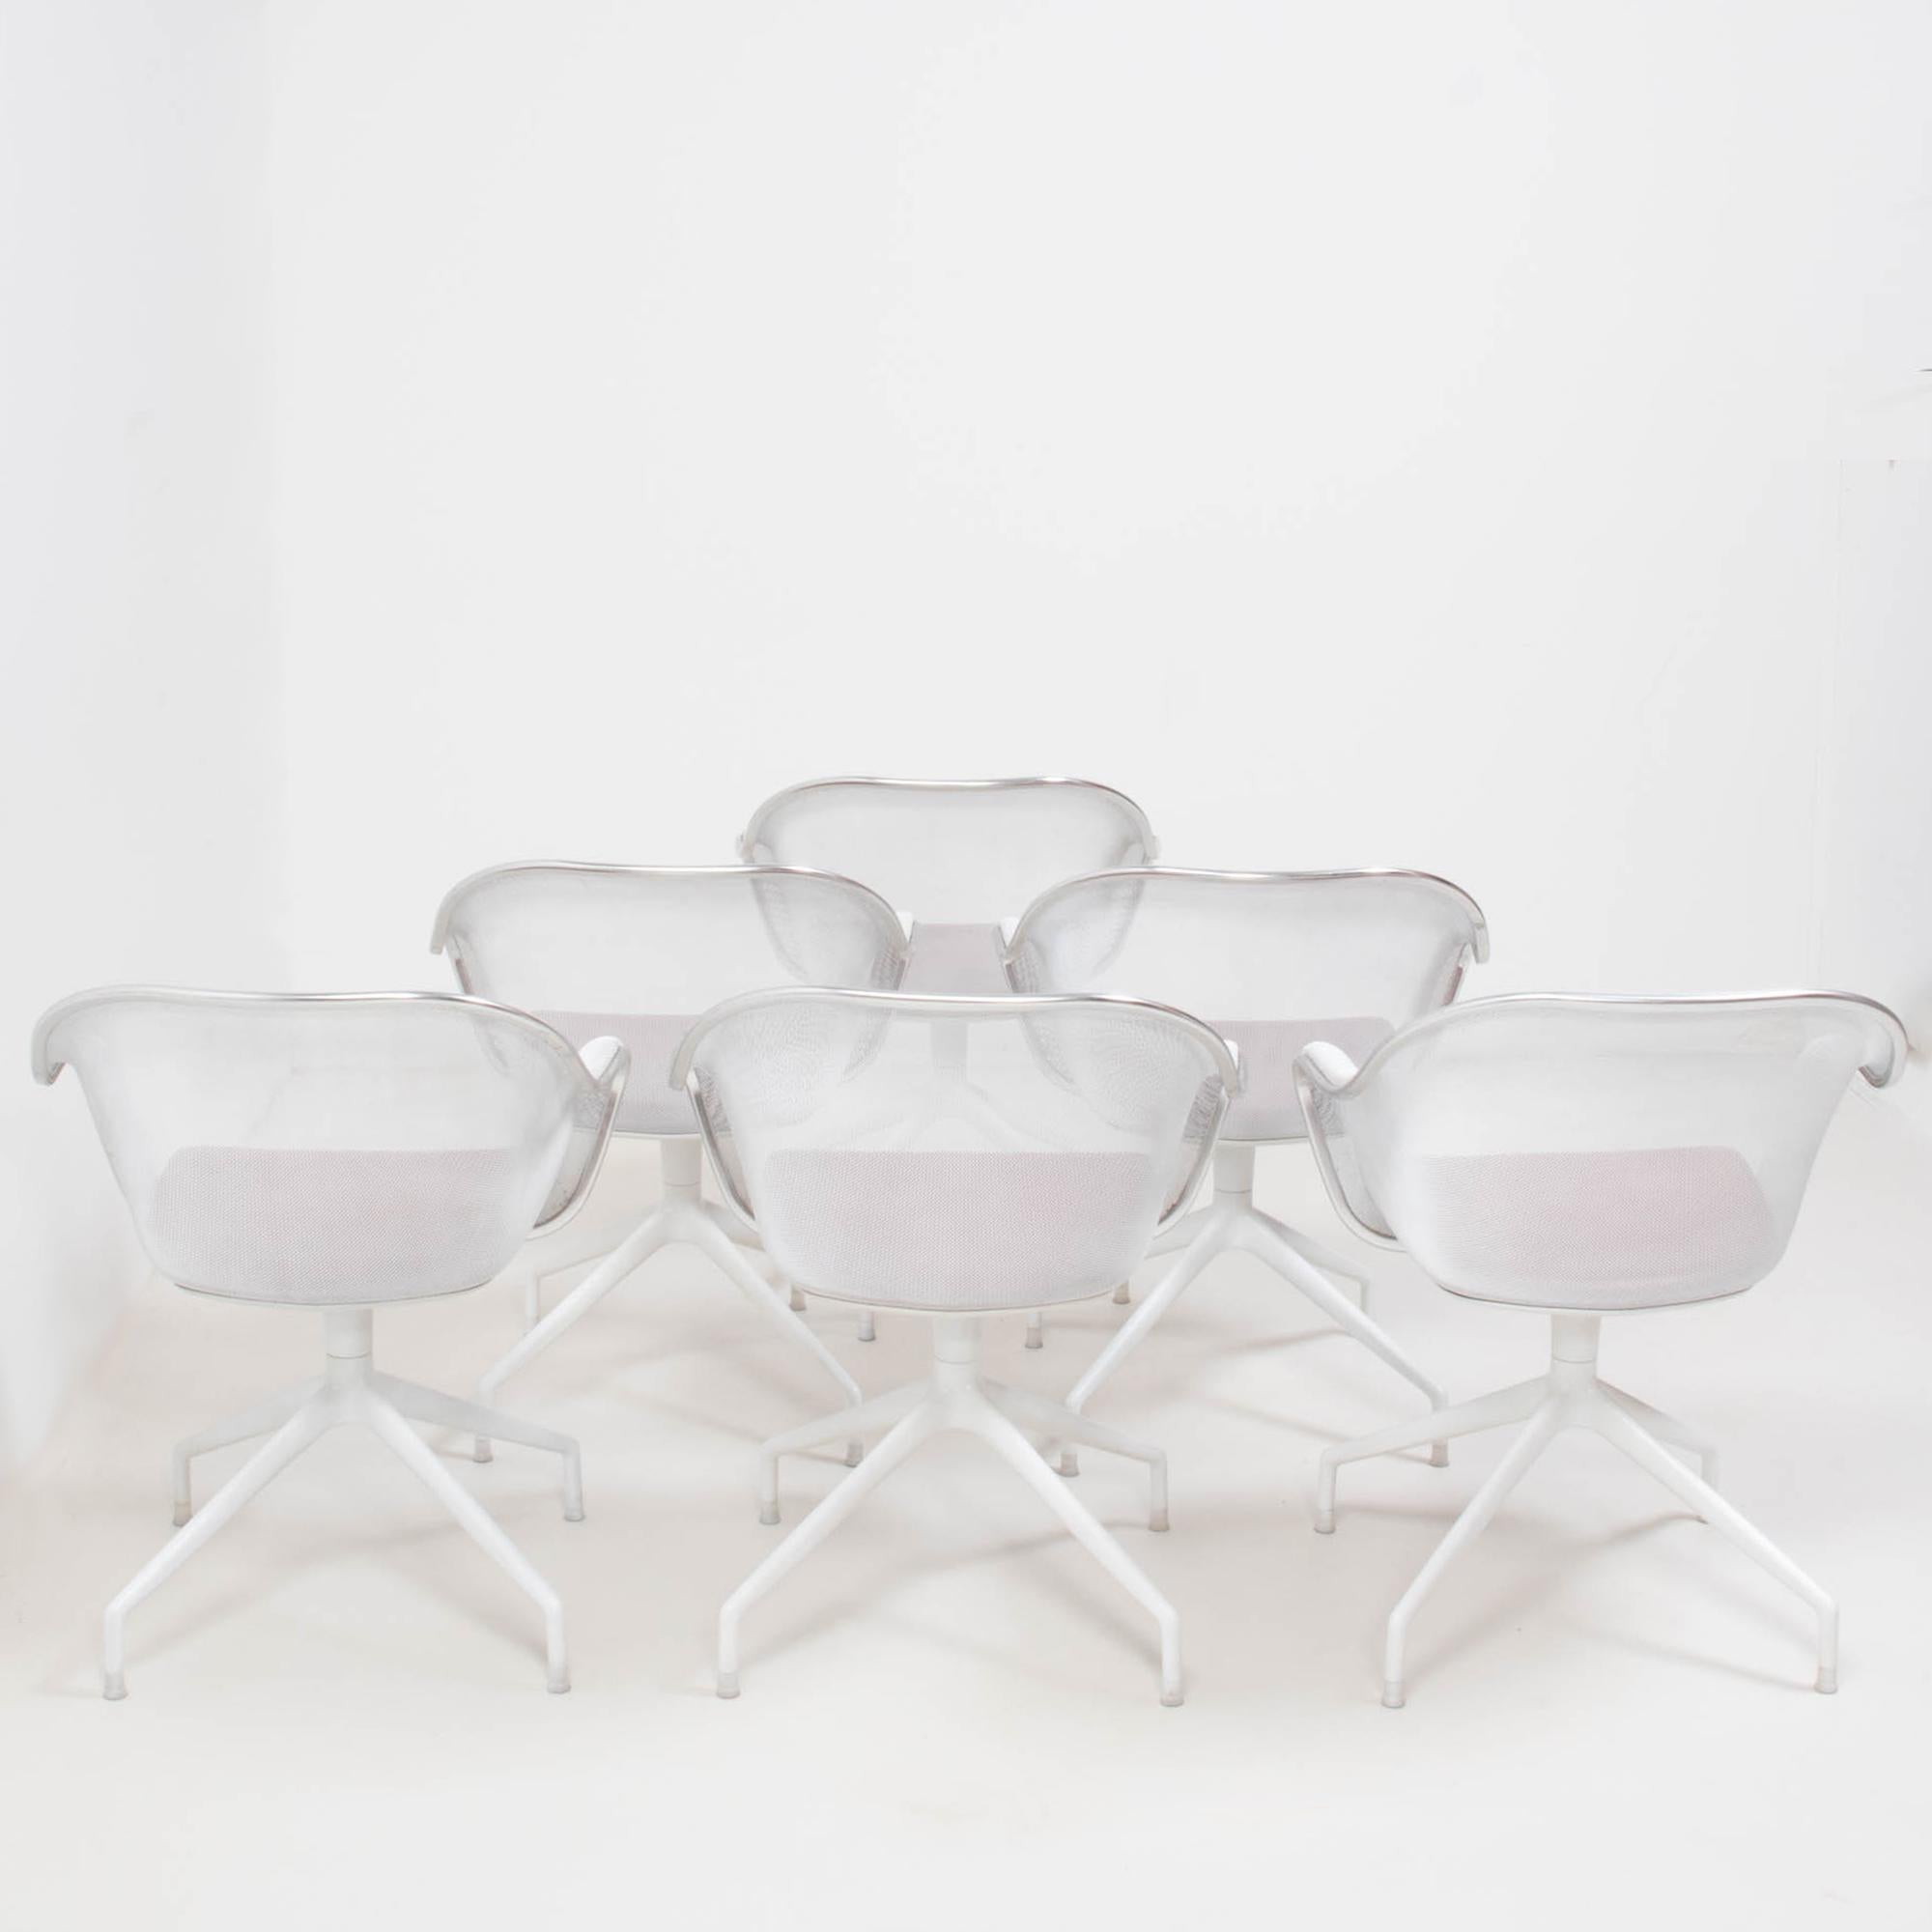 Italian B&B Italia by Antonio Citterio Luta White & Red Leather Swivel Chairs, Set of 6